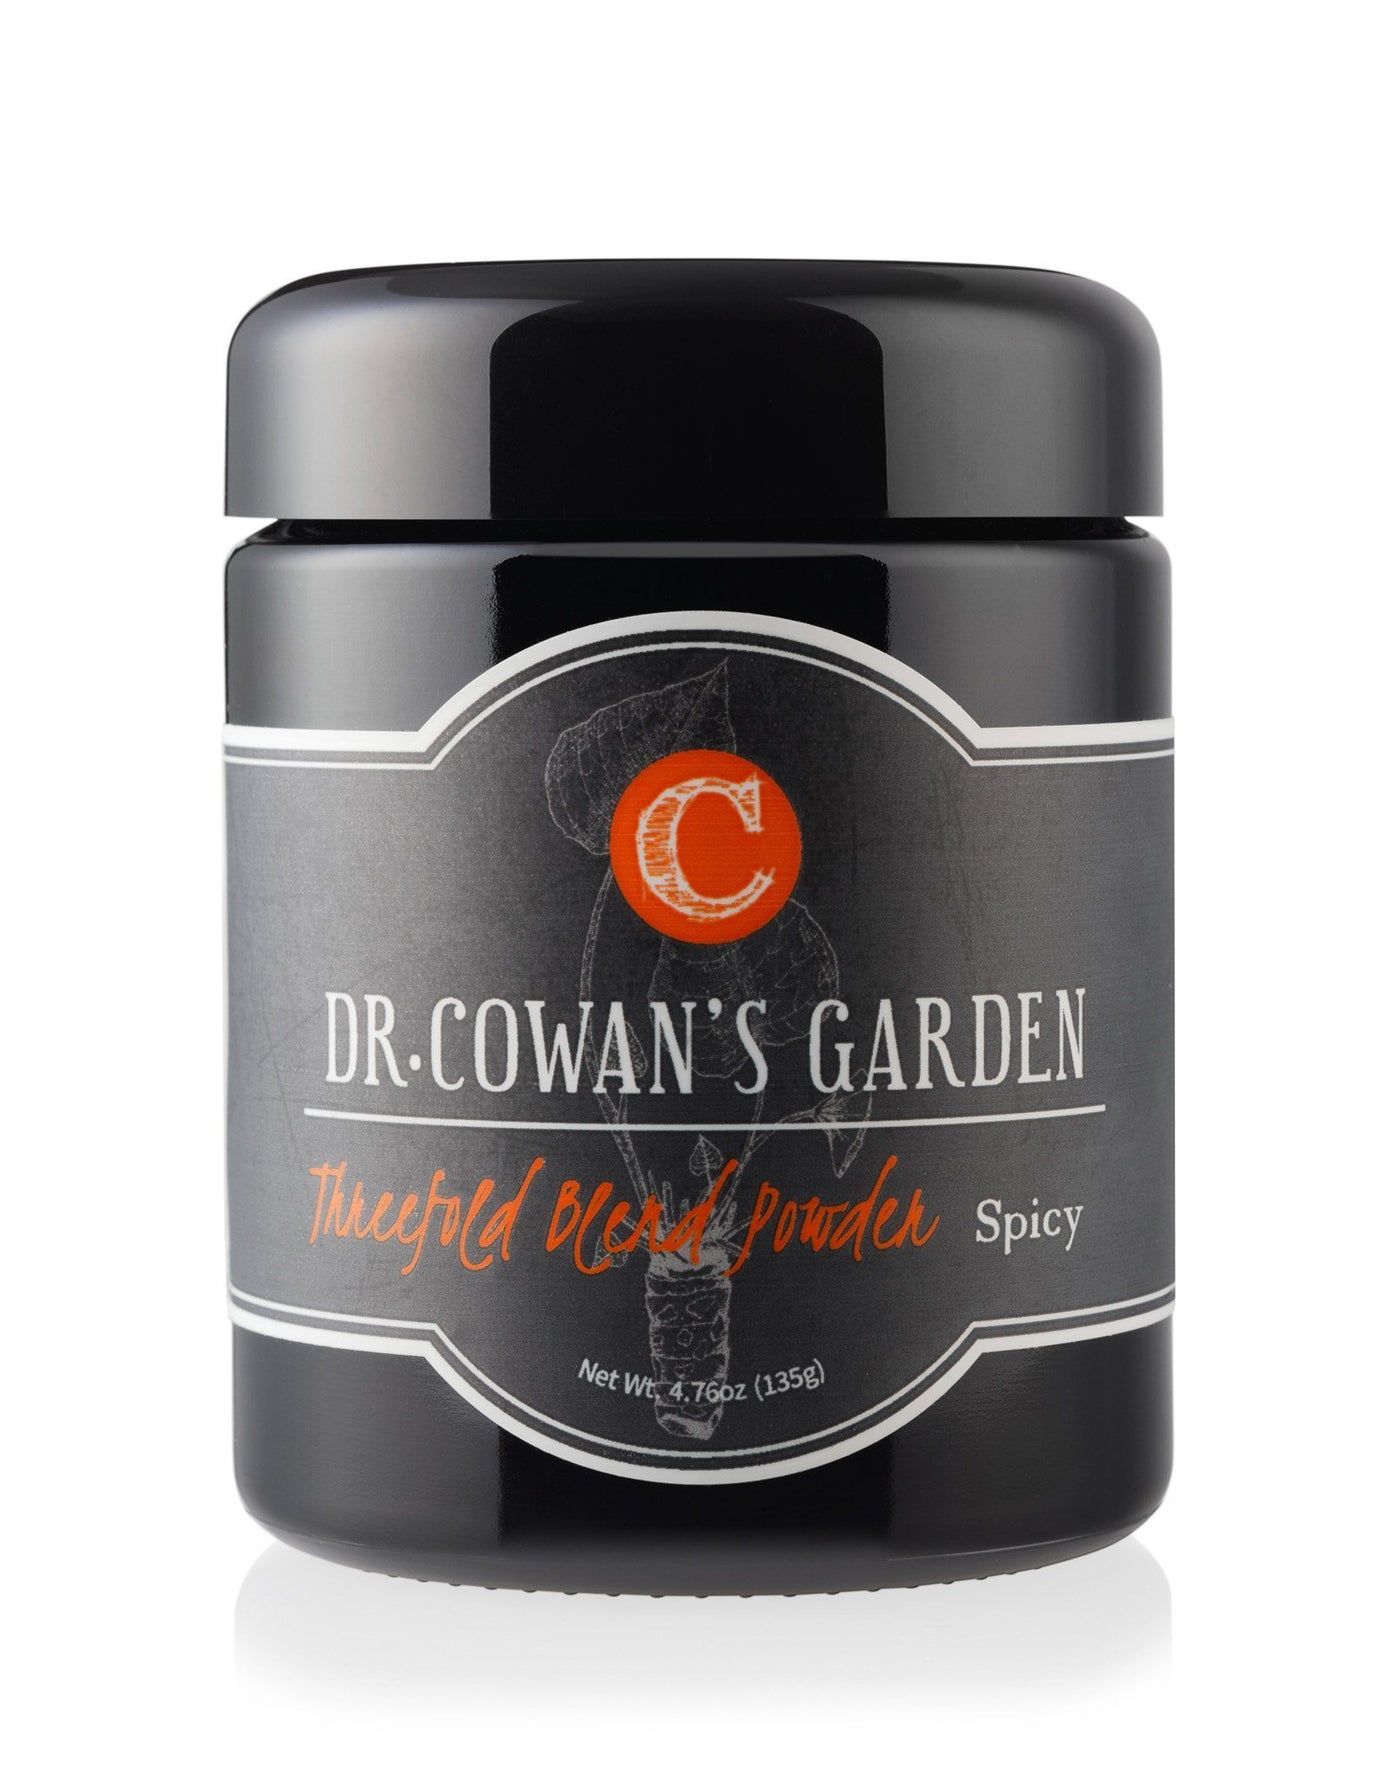 Threefold Blend Powder (Spicy), Organic (by Dr. Cowan's Garden)